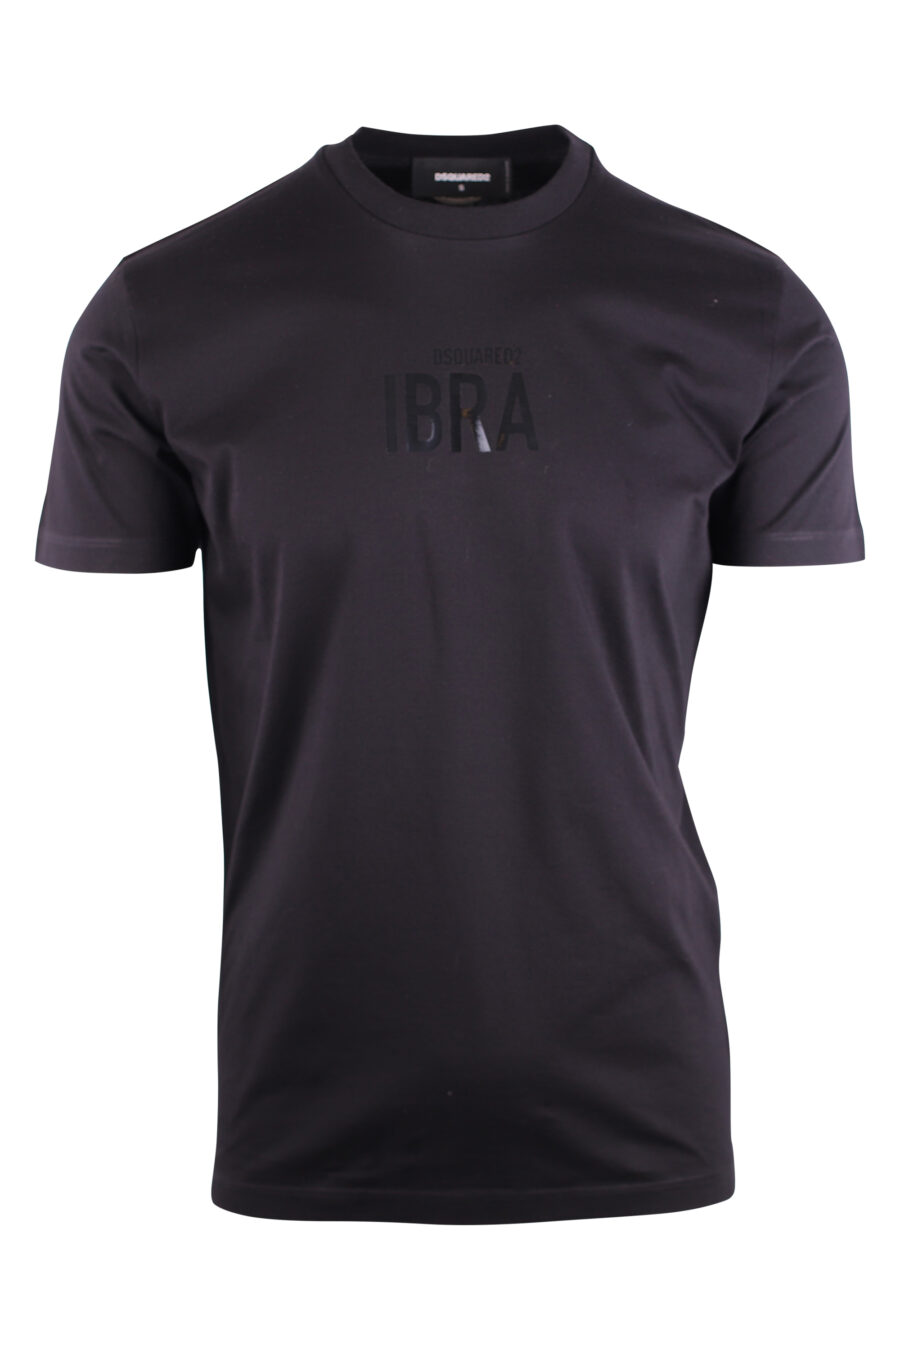 Camiseta negra con logo "ibra" monocromático - IMG 3109